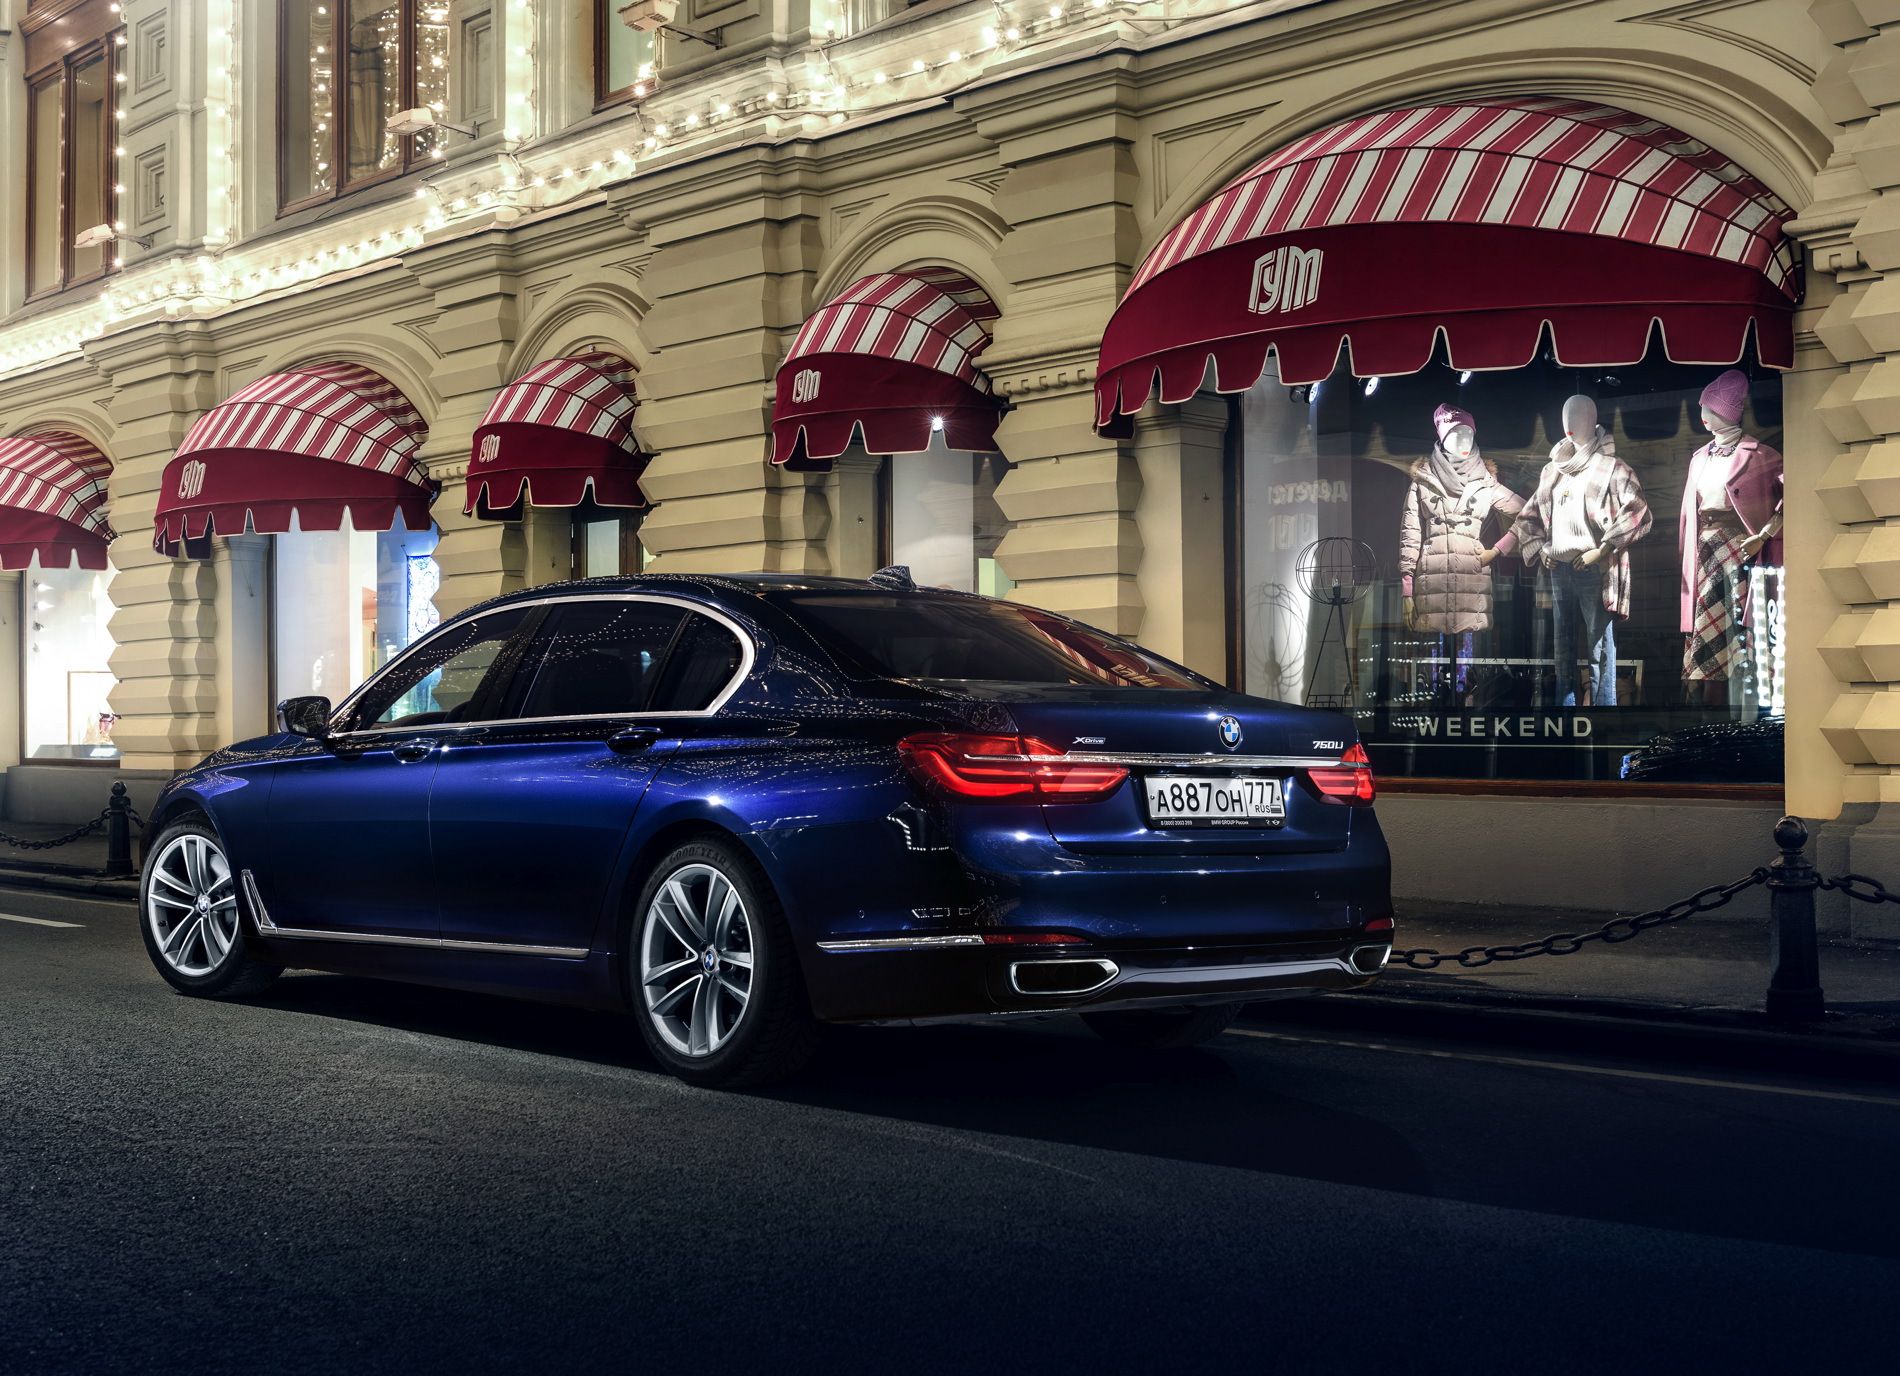 2016 BMW 7 Series luxury images 23 750x543 photo | Cars | Pinterest ...